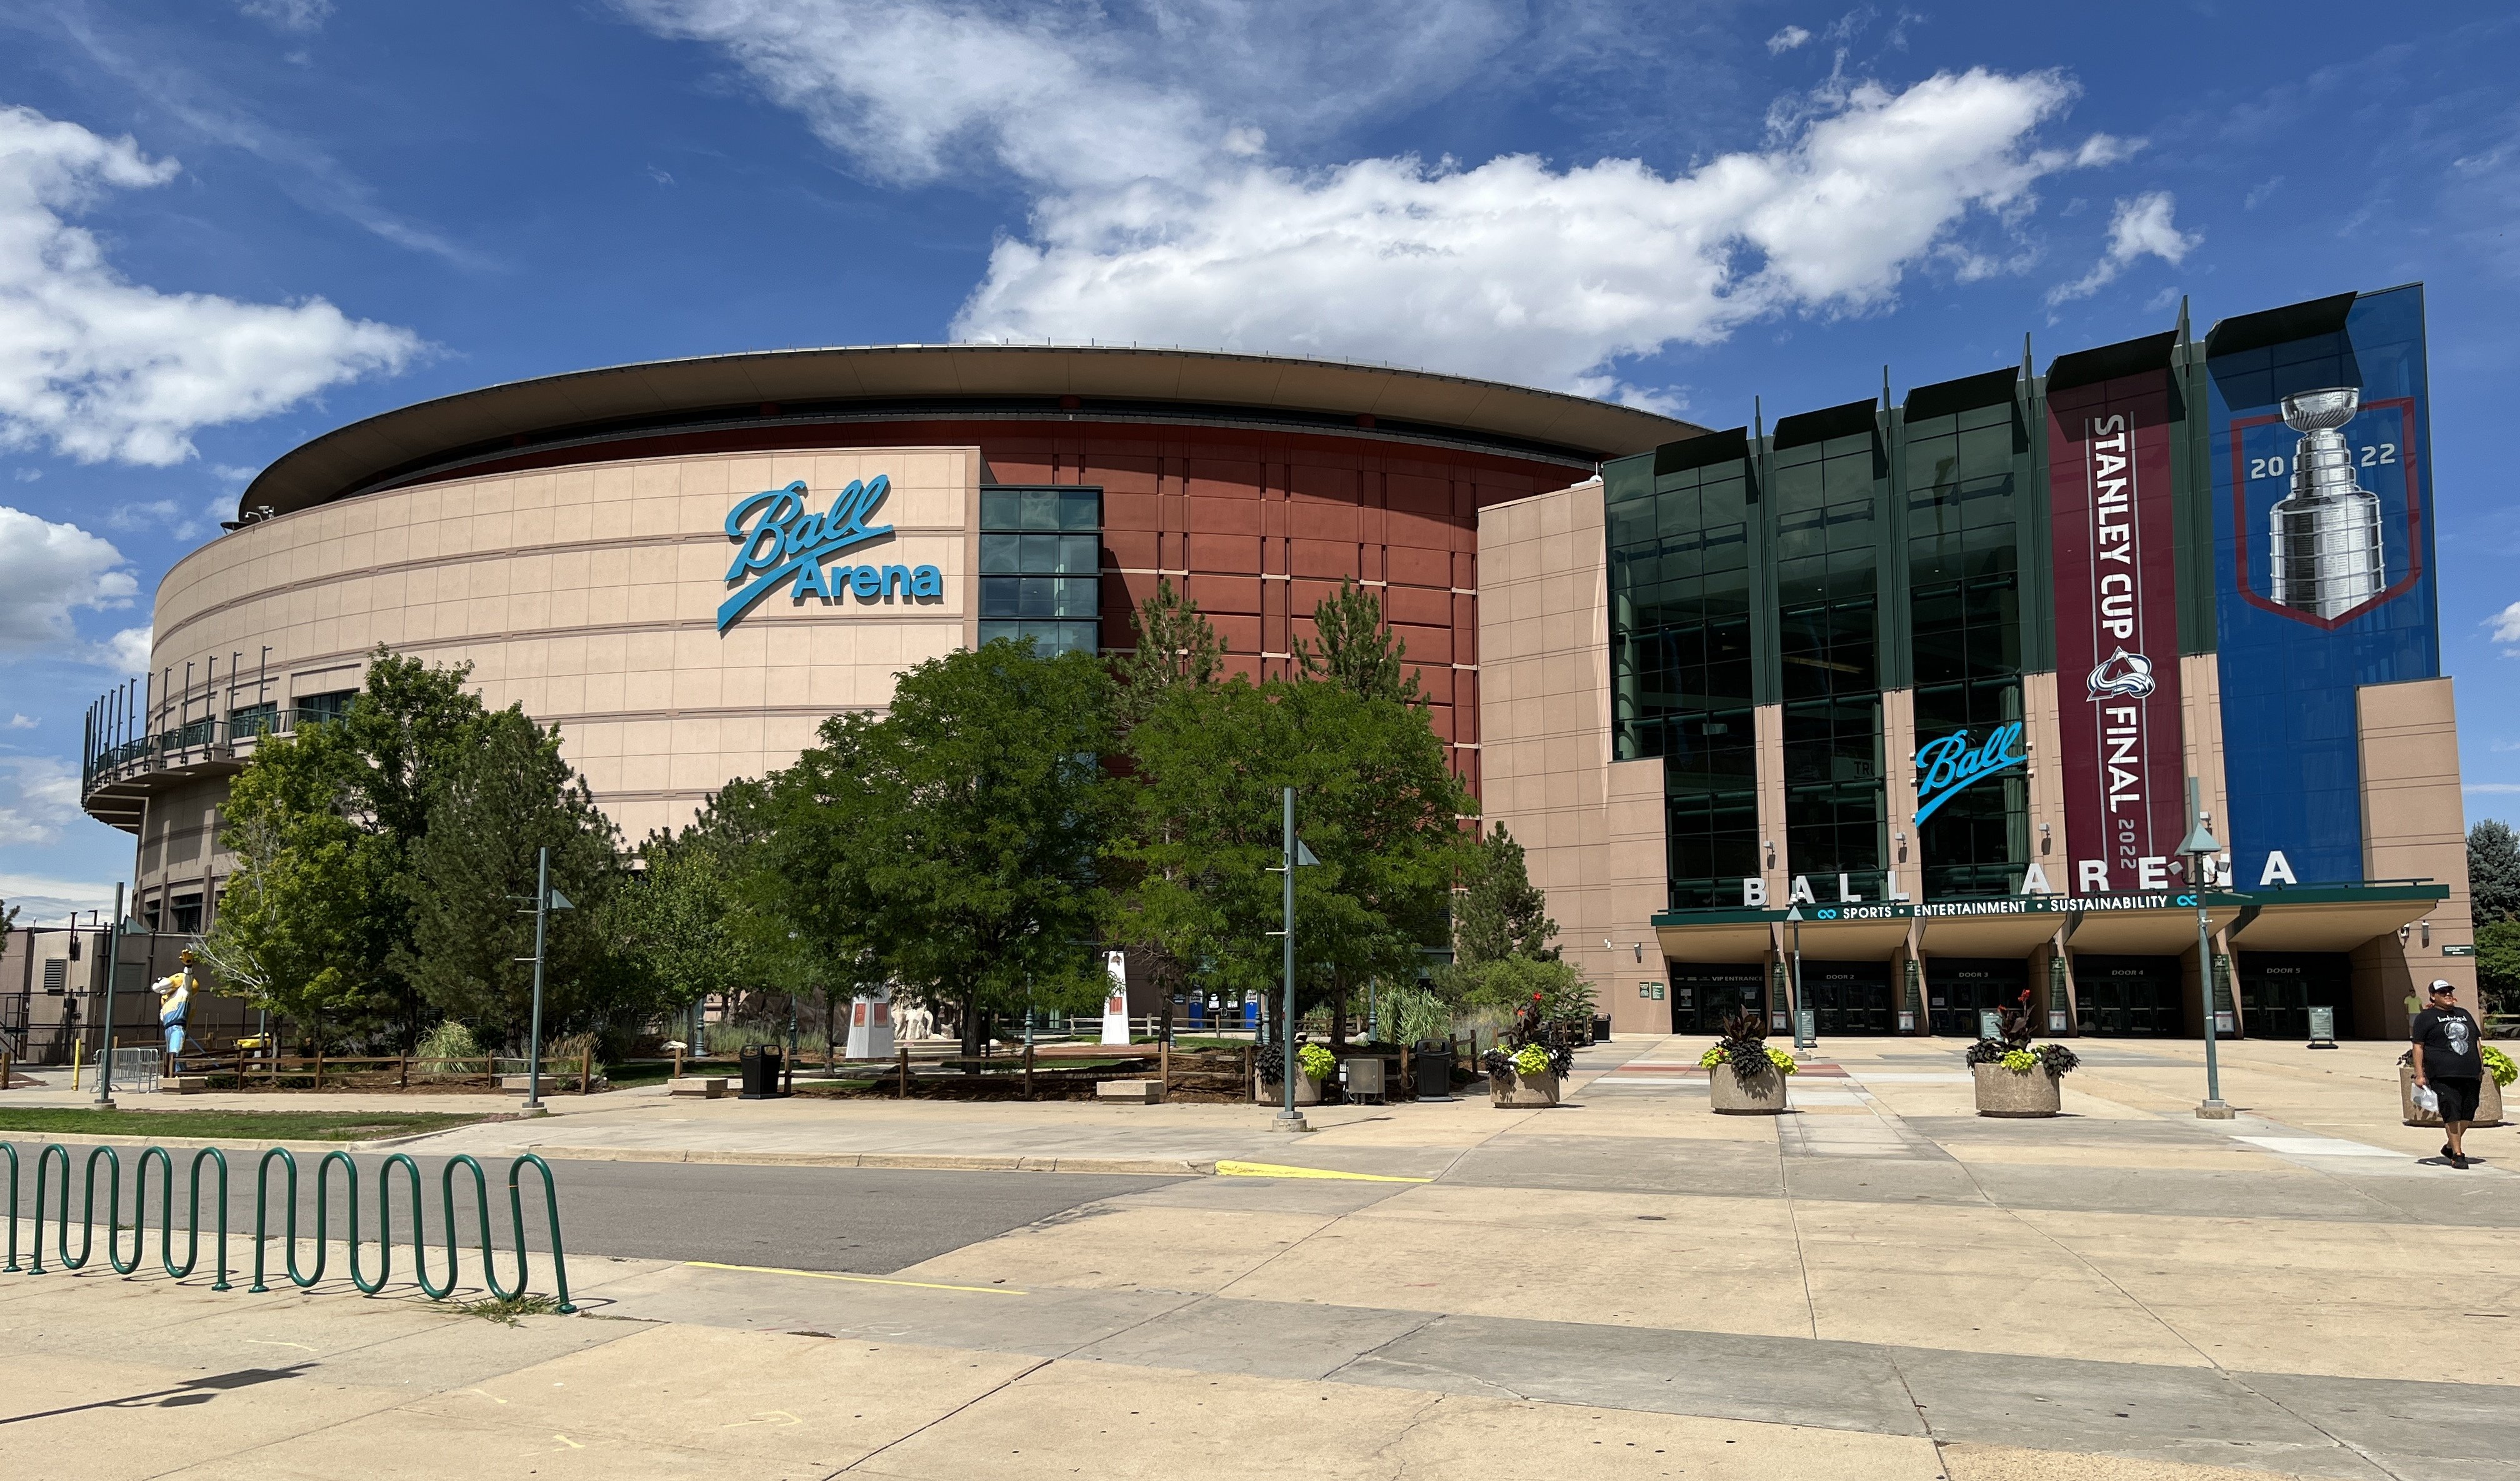 Ball Arena - Home of the Colorado Avalanche & Denver Nuggets